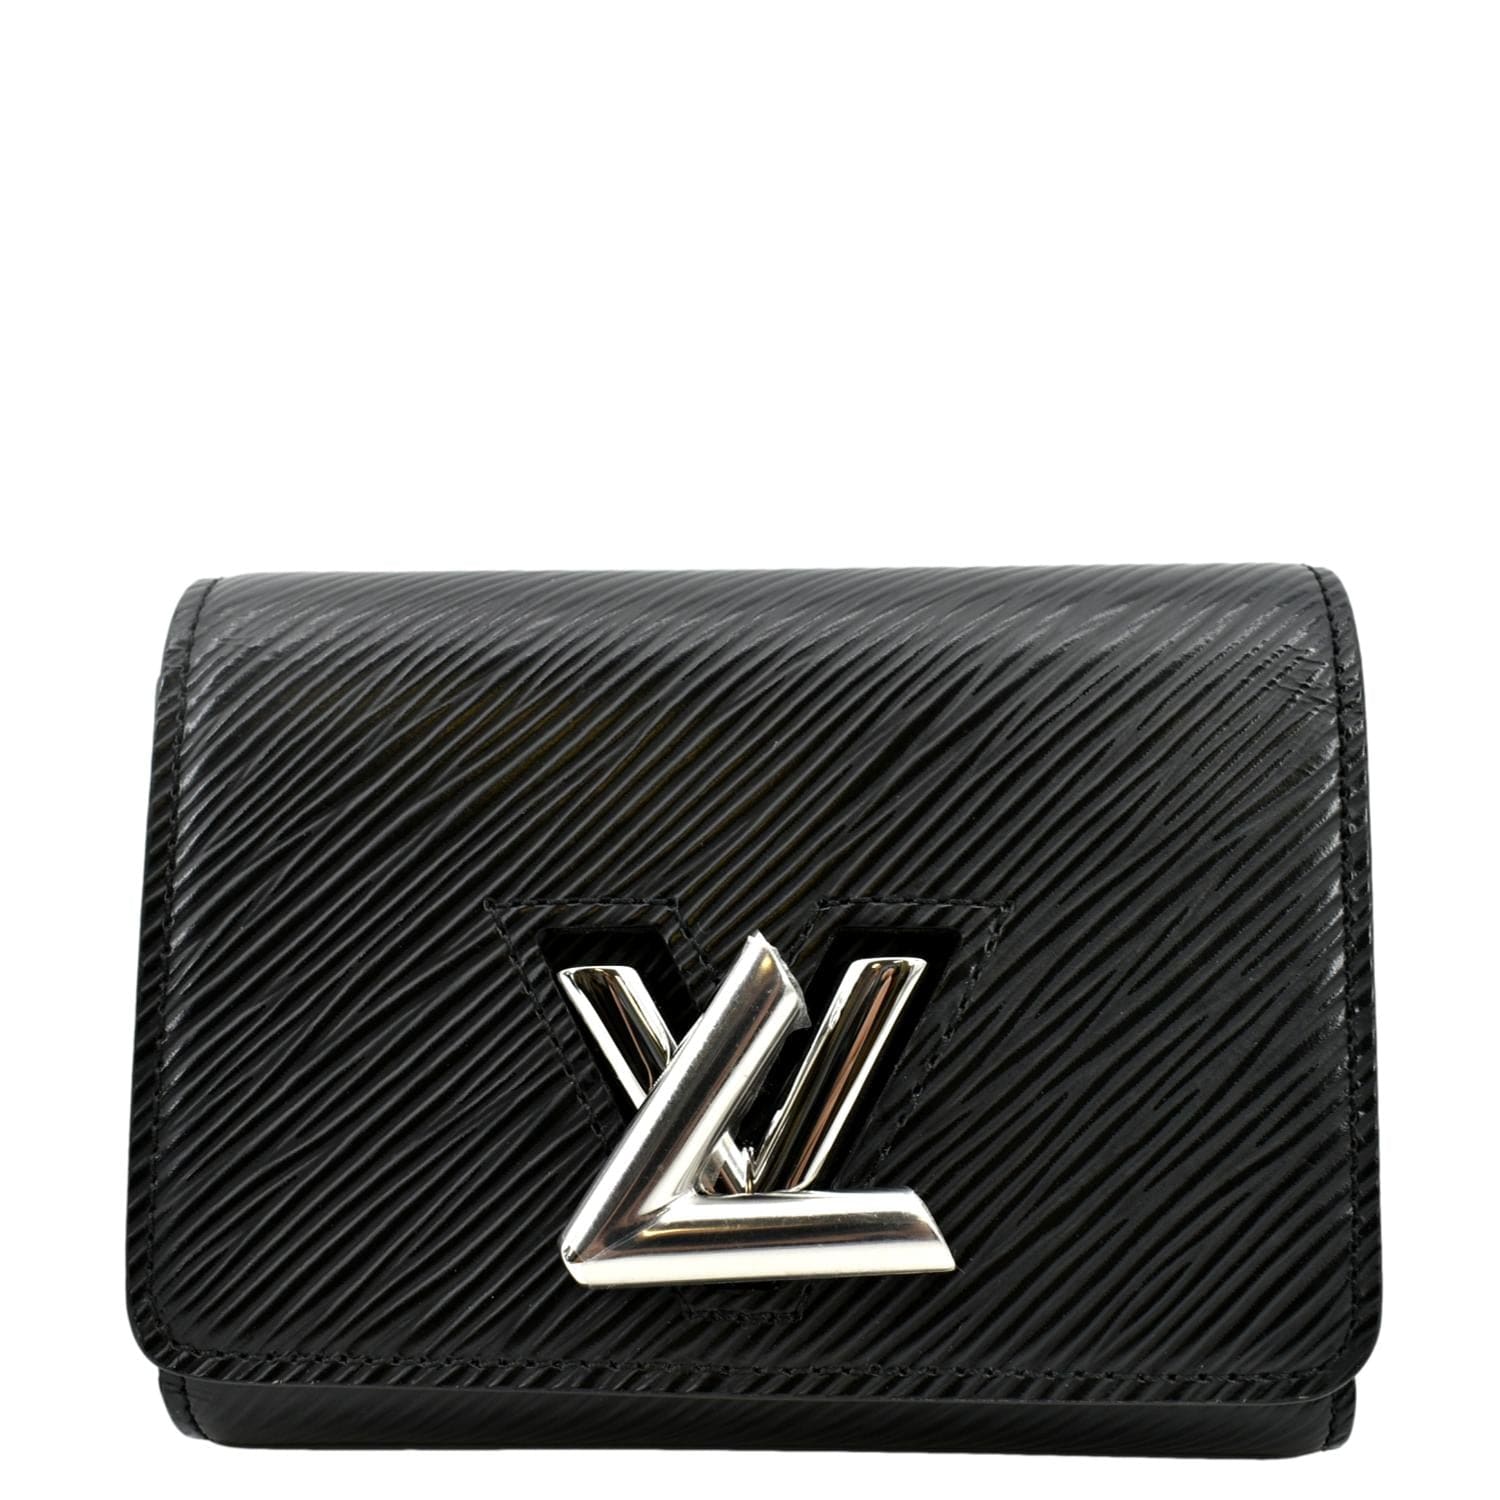 lv purse black